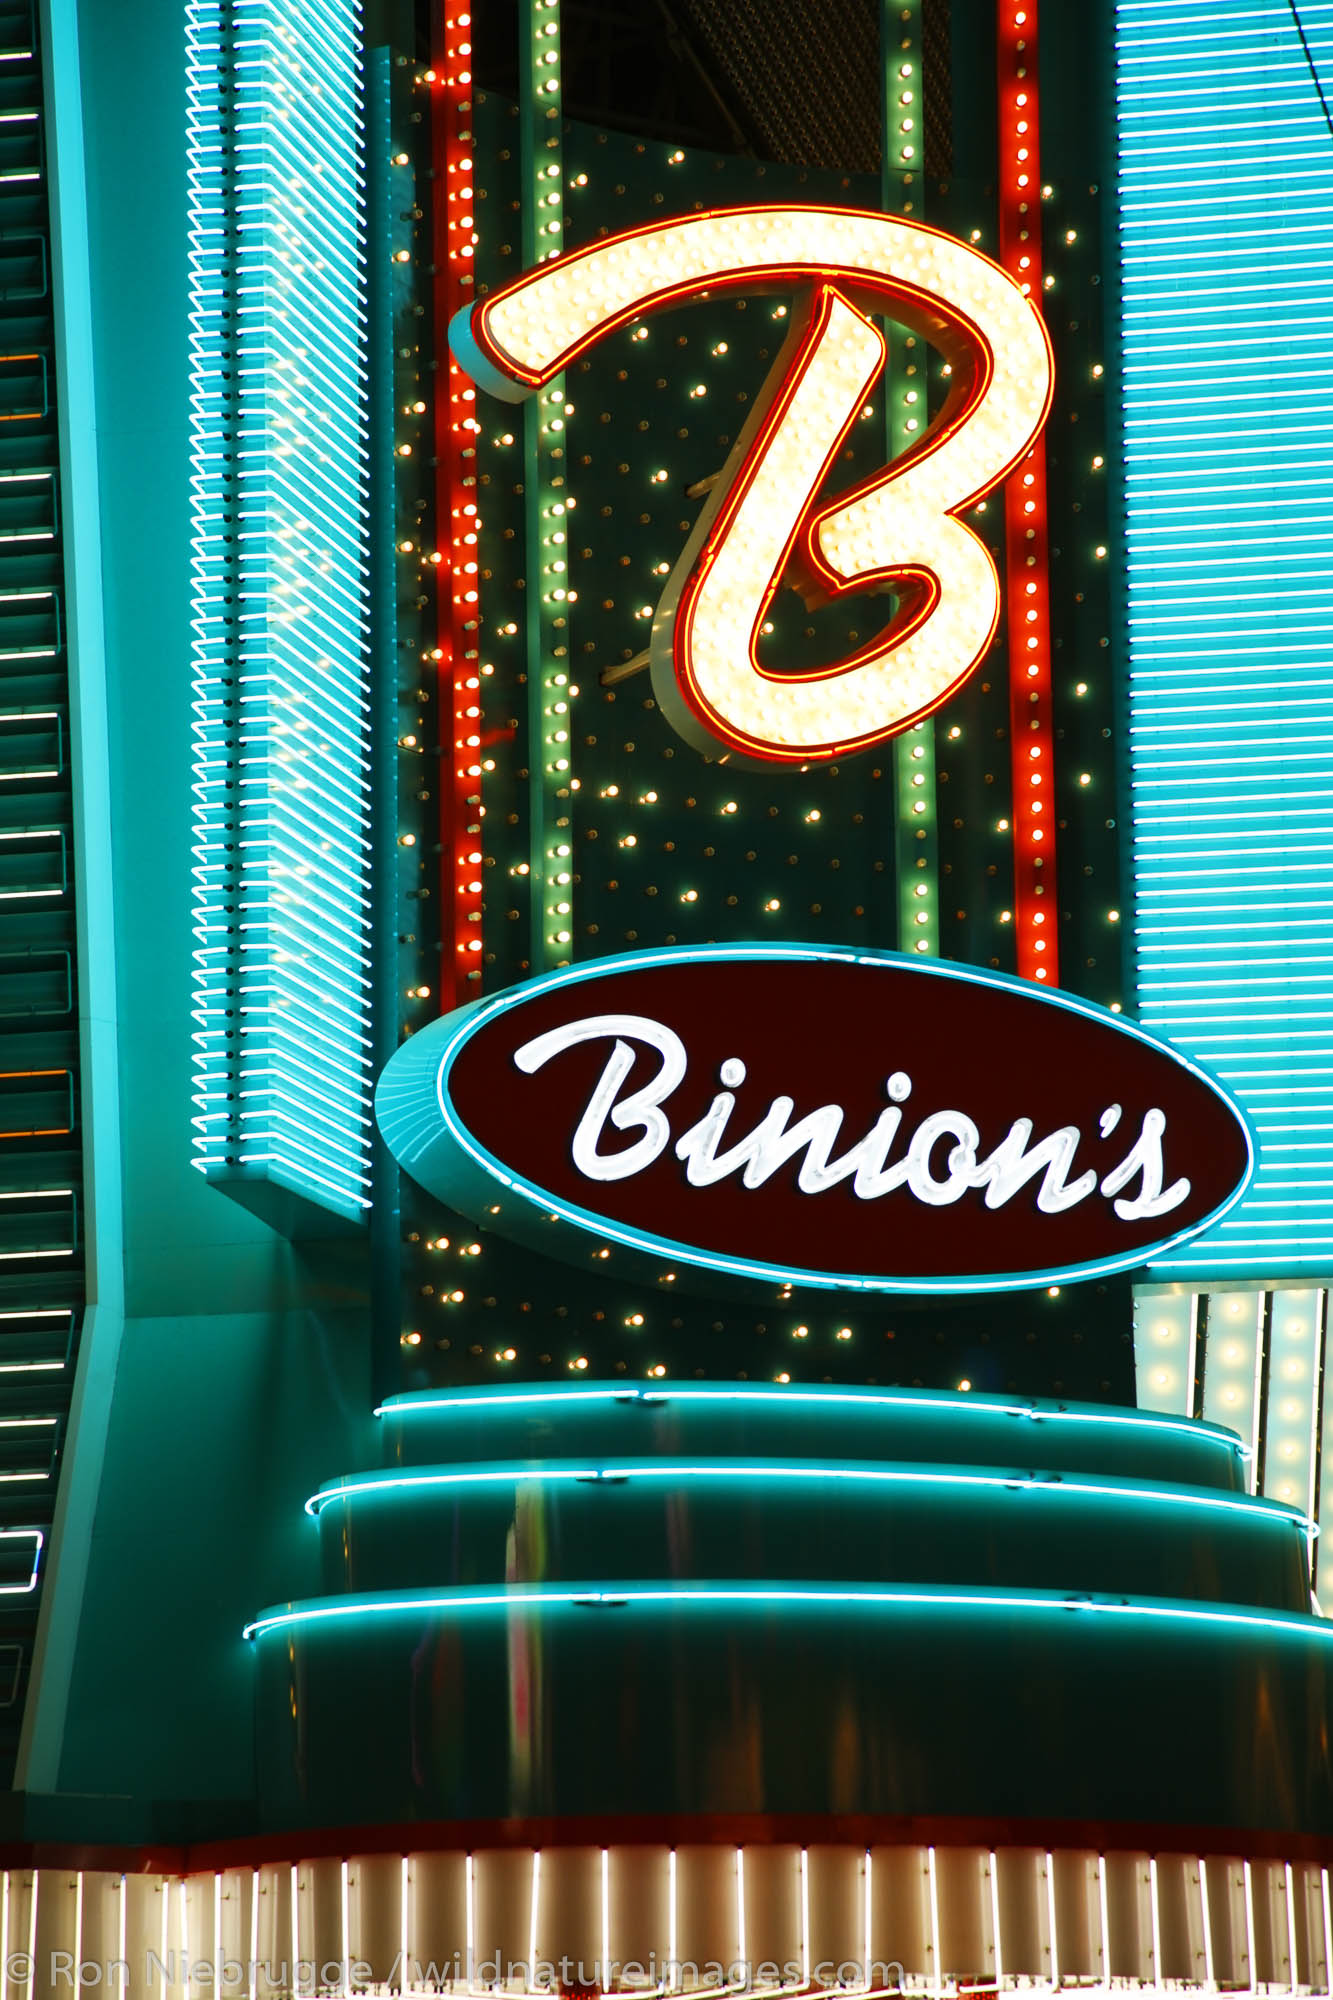 Binion's Hotel and Casino, downtown Las Vegas, Nevada.